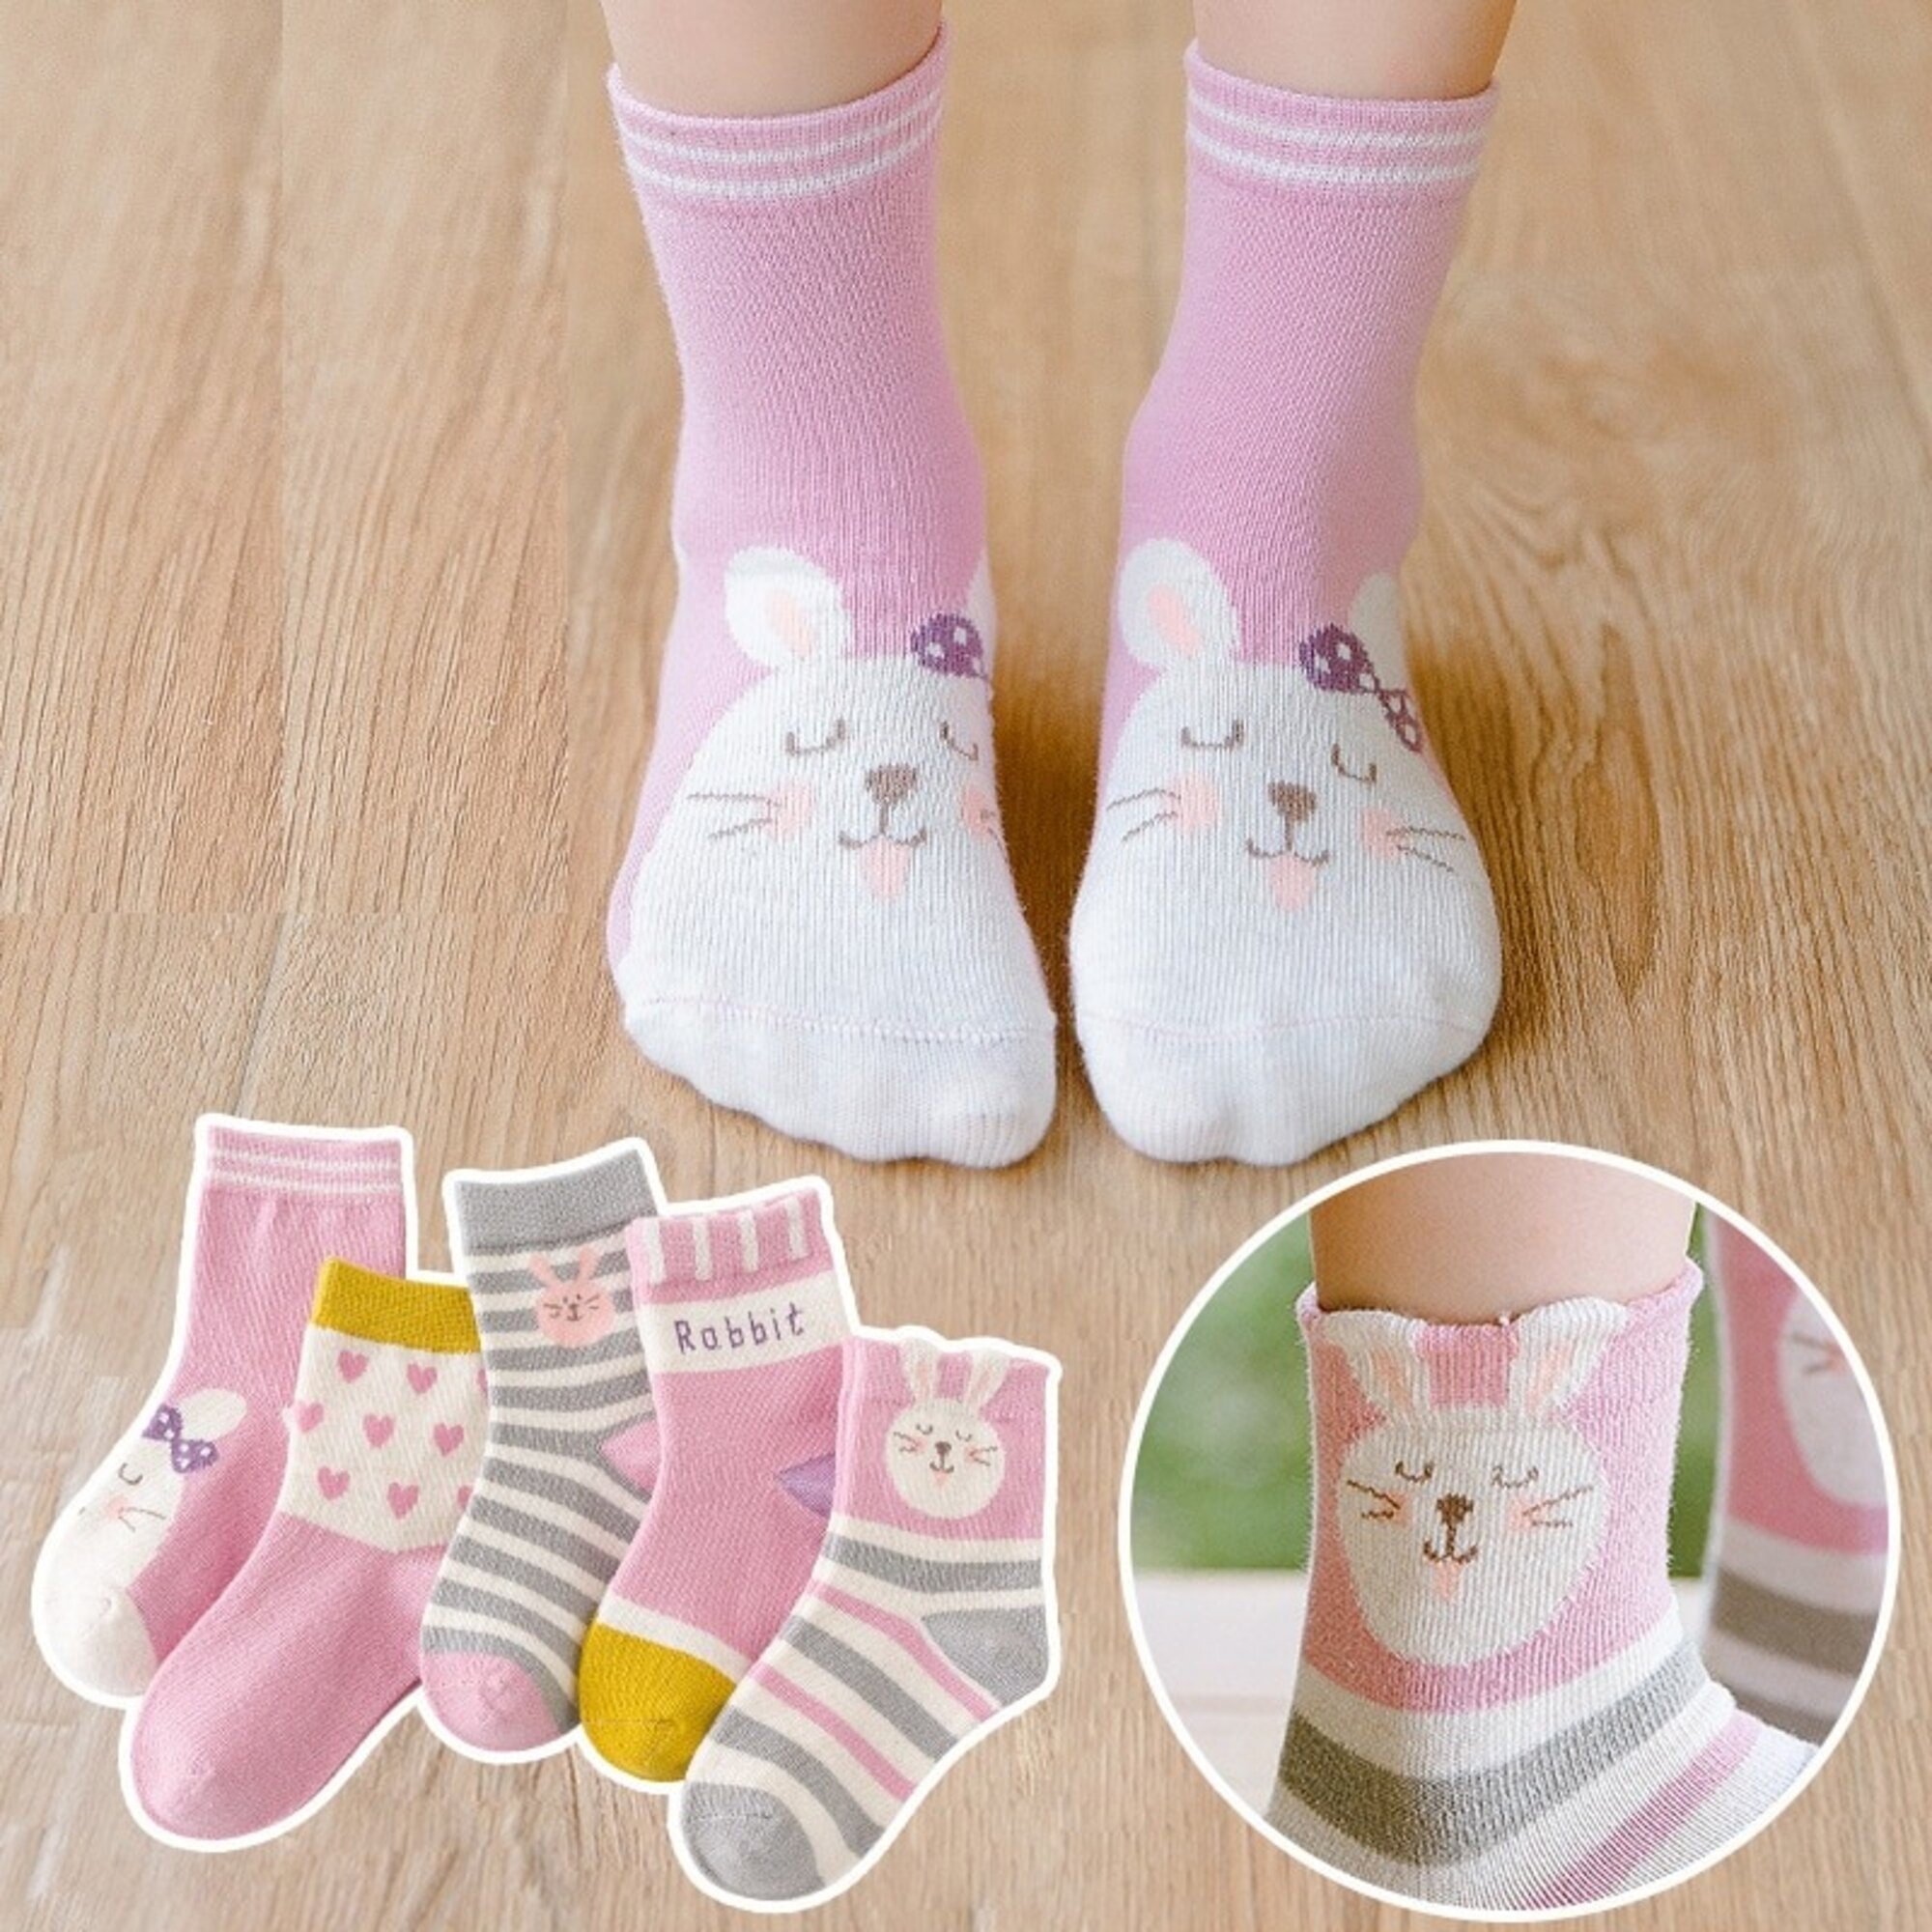 5 Pairs Cotton Newborn Baby Socks Winter Warm Girl Boy Socks Cartoon Toddler 